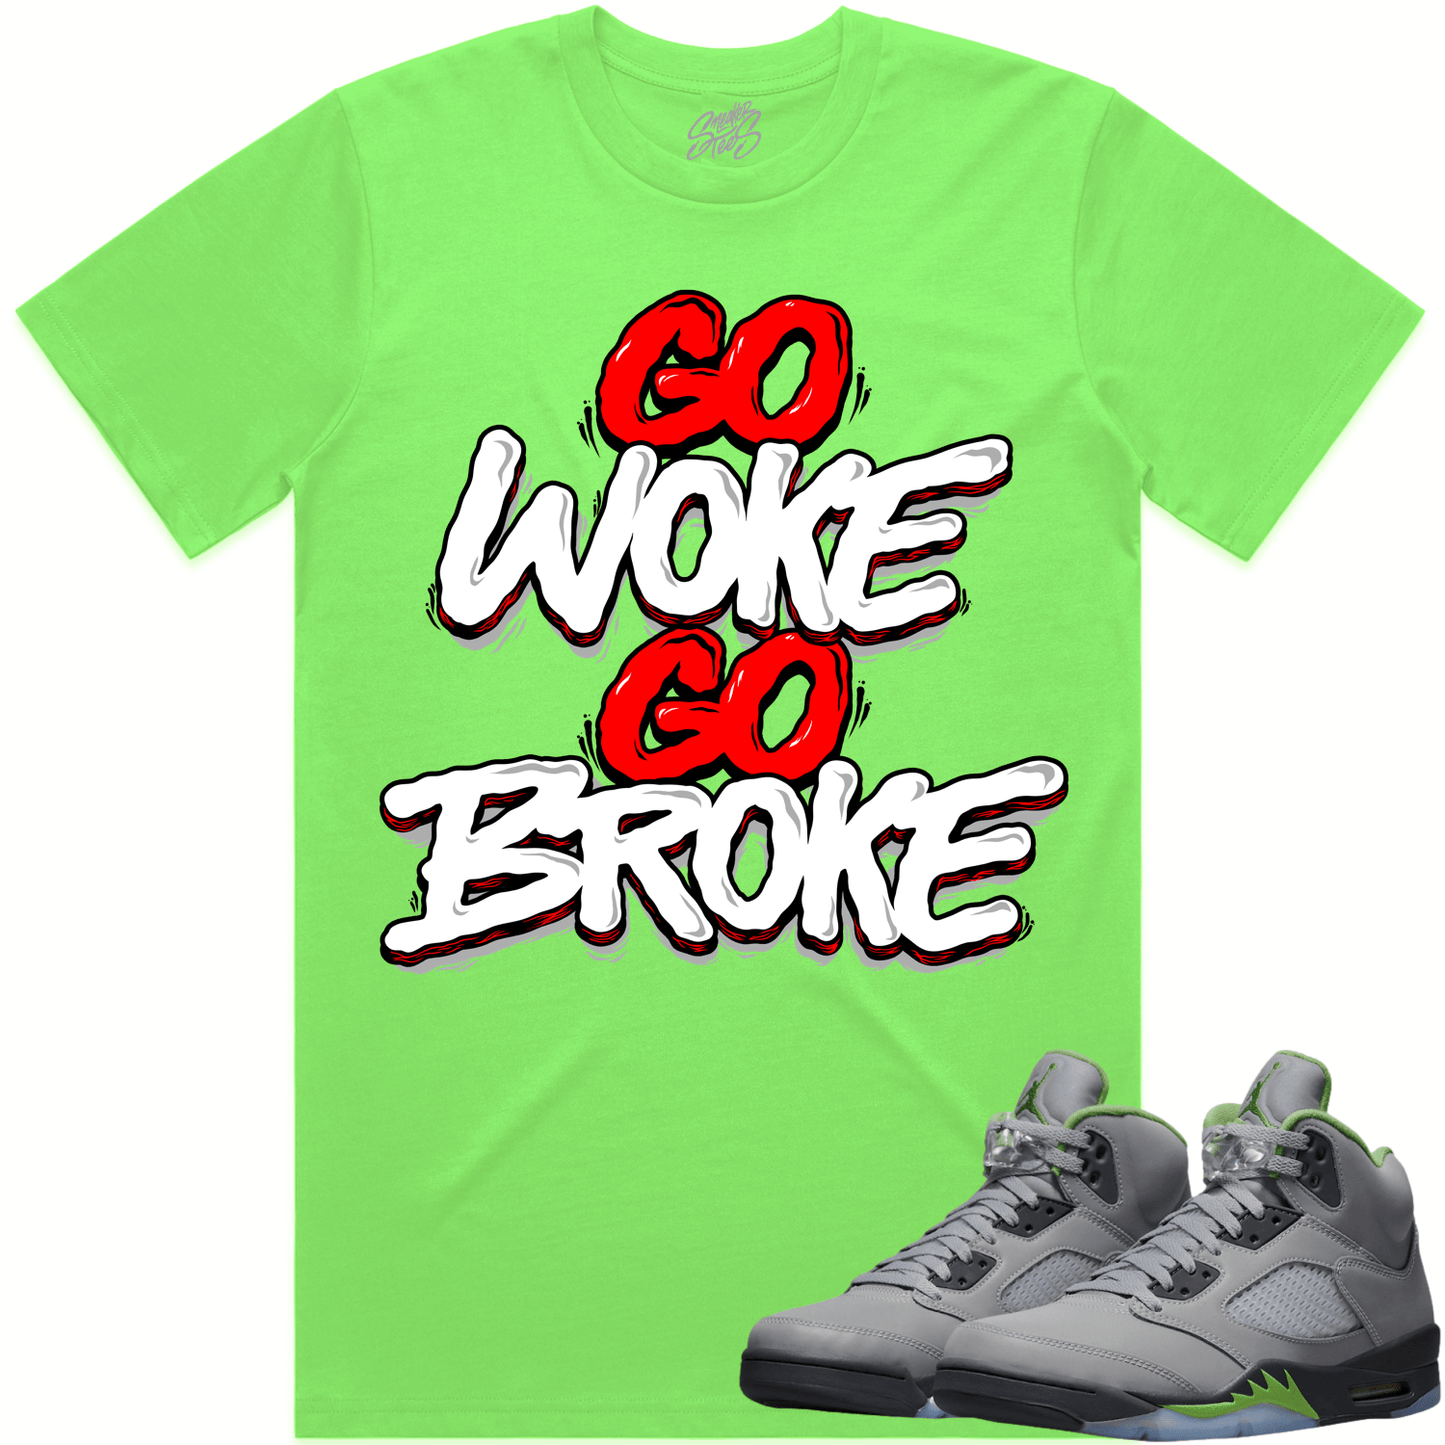 Green Bean 5s Shirt - Jordan 5 Green Bean Shirts - Go Woke Go Broke